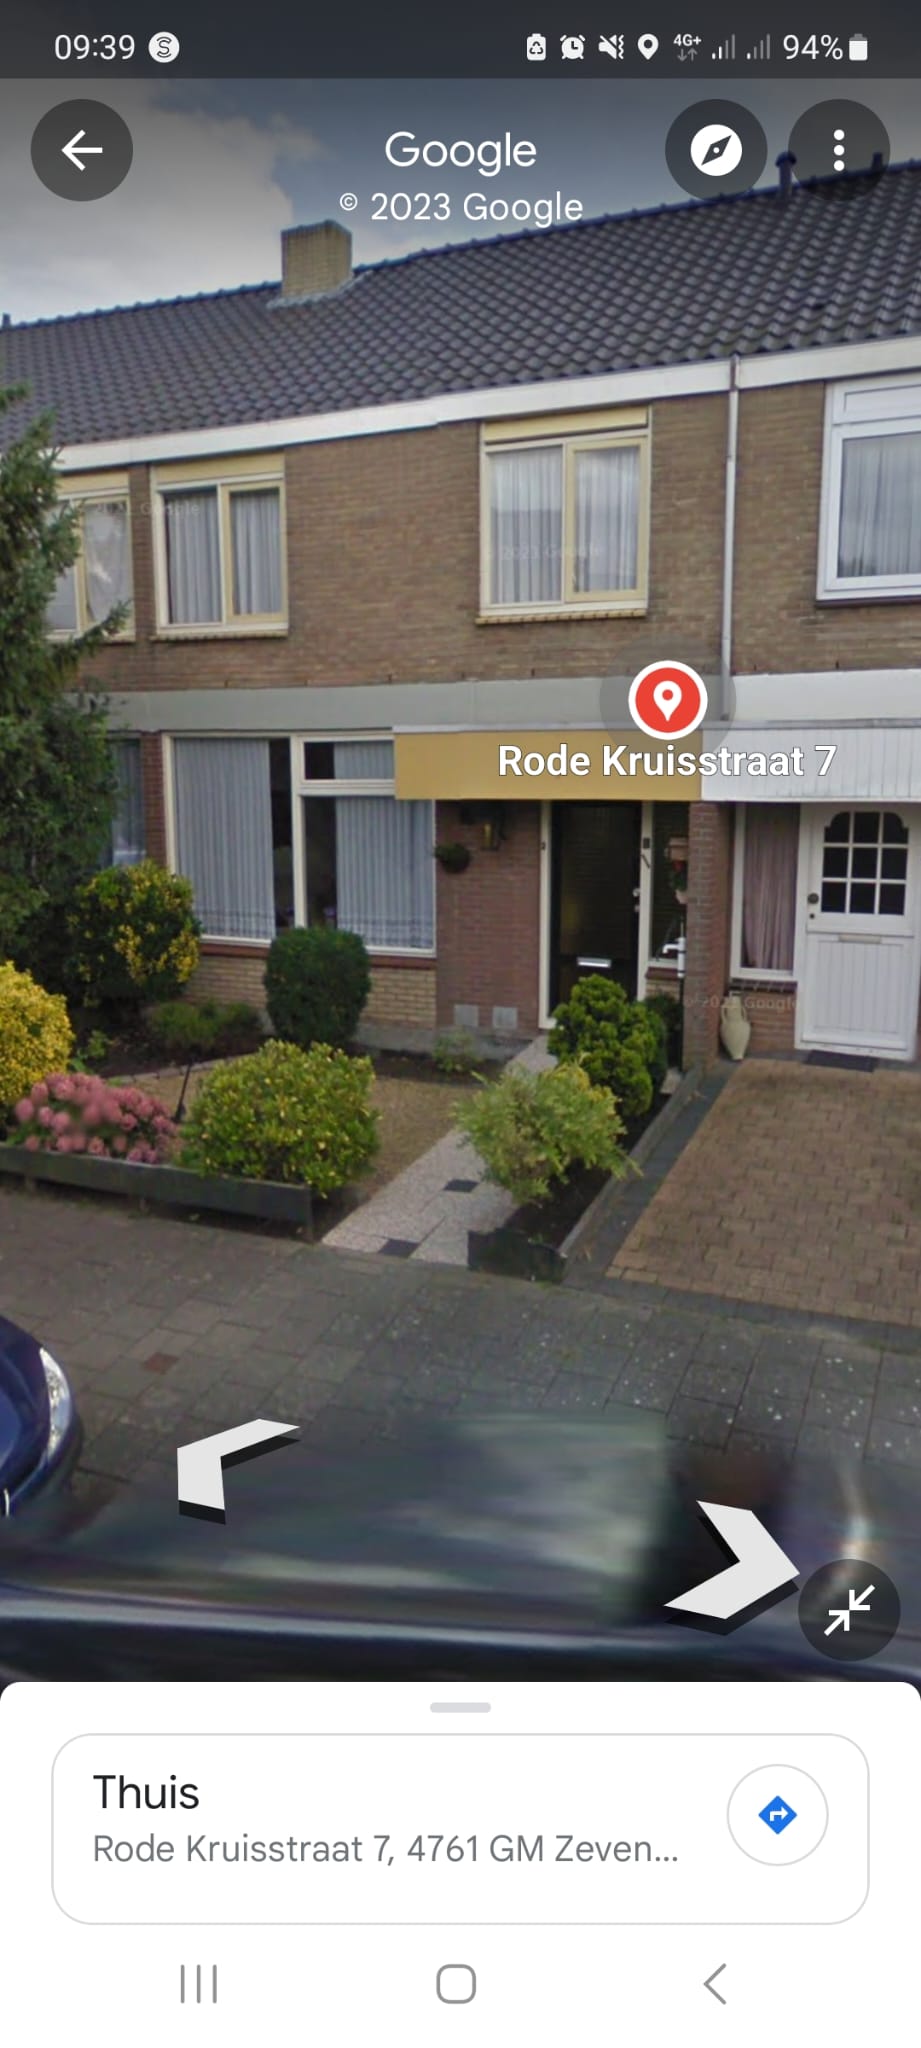 Rode Kruisstraat 7, 4761 GM Zevenbergen, Nederland